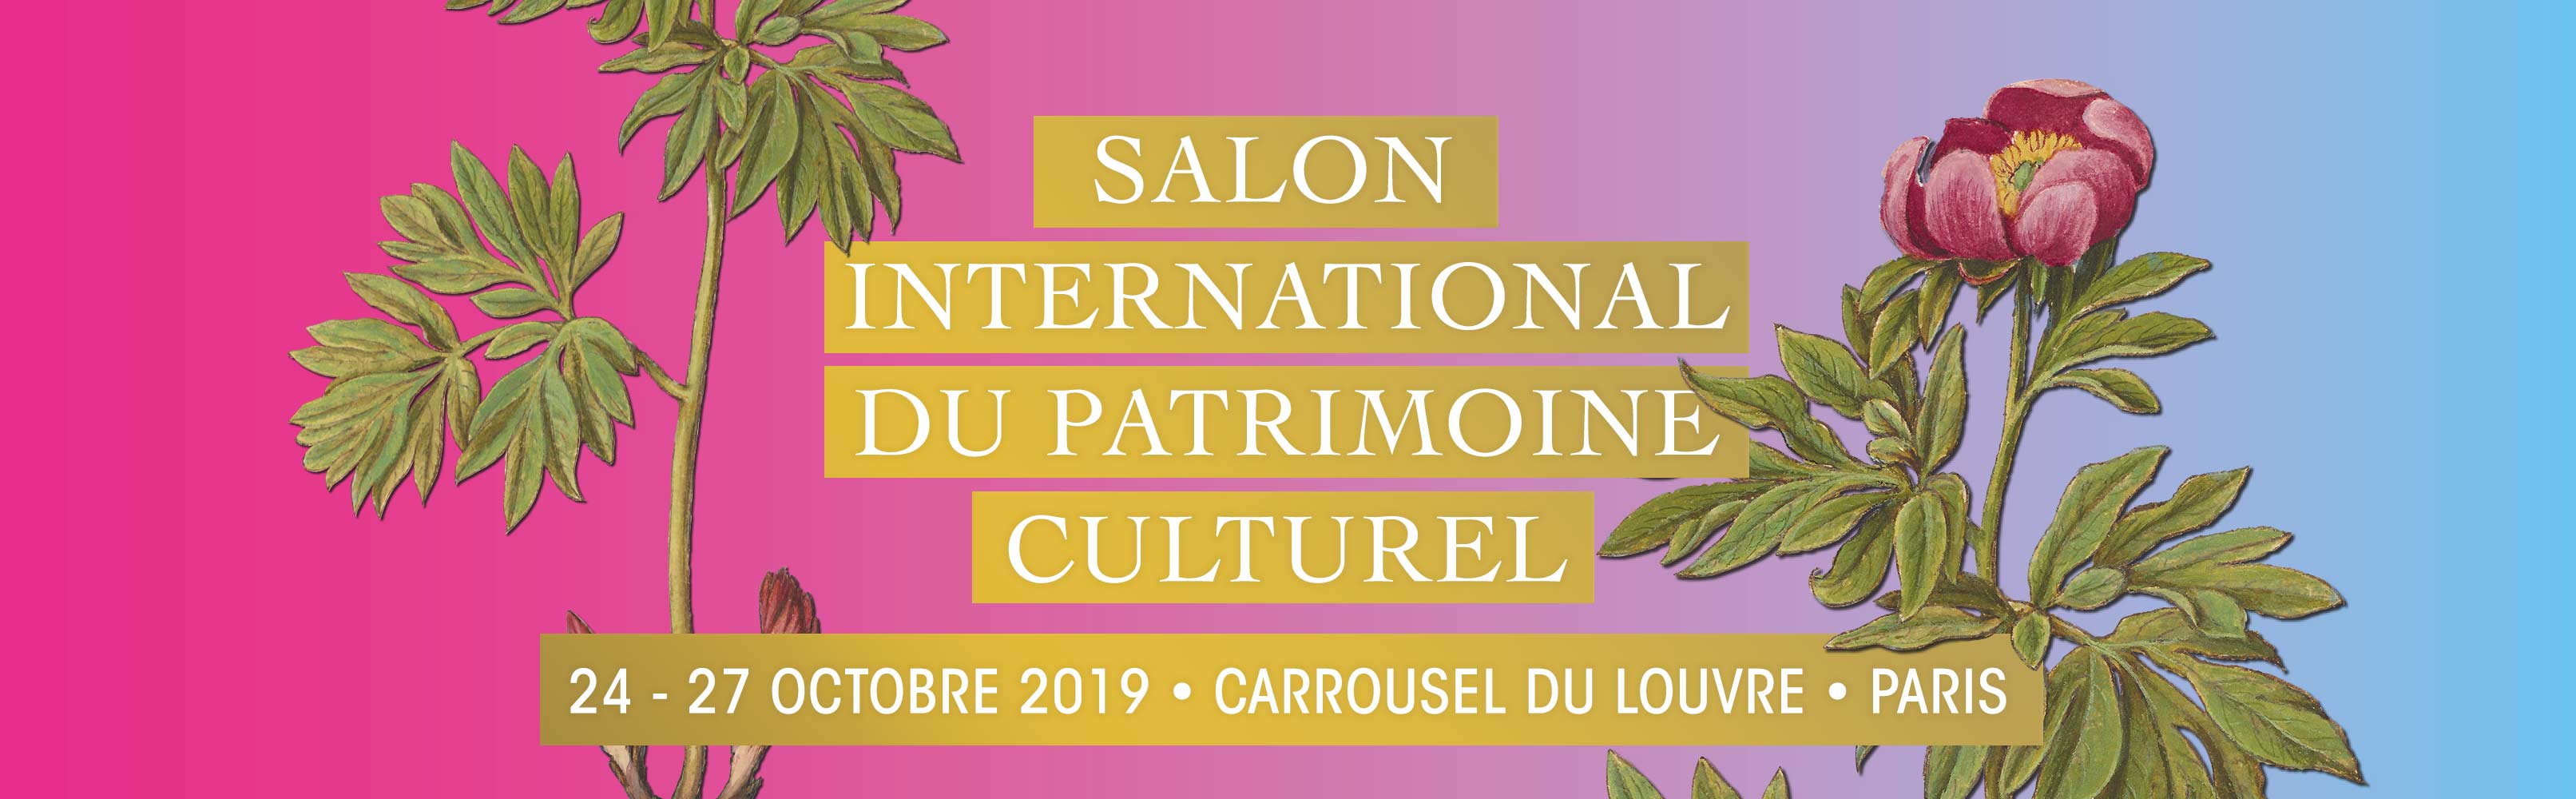 SALON INTERNATIONAL DU PATRIMOINE CULTUREL header 1